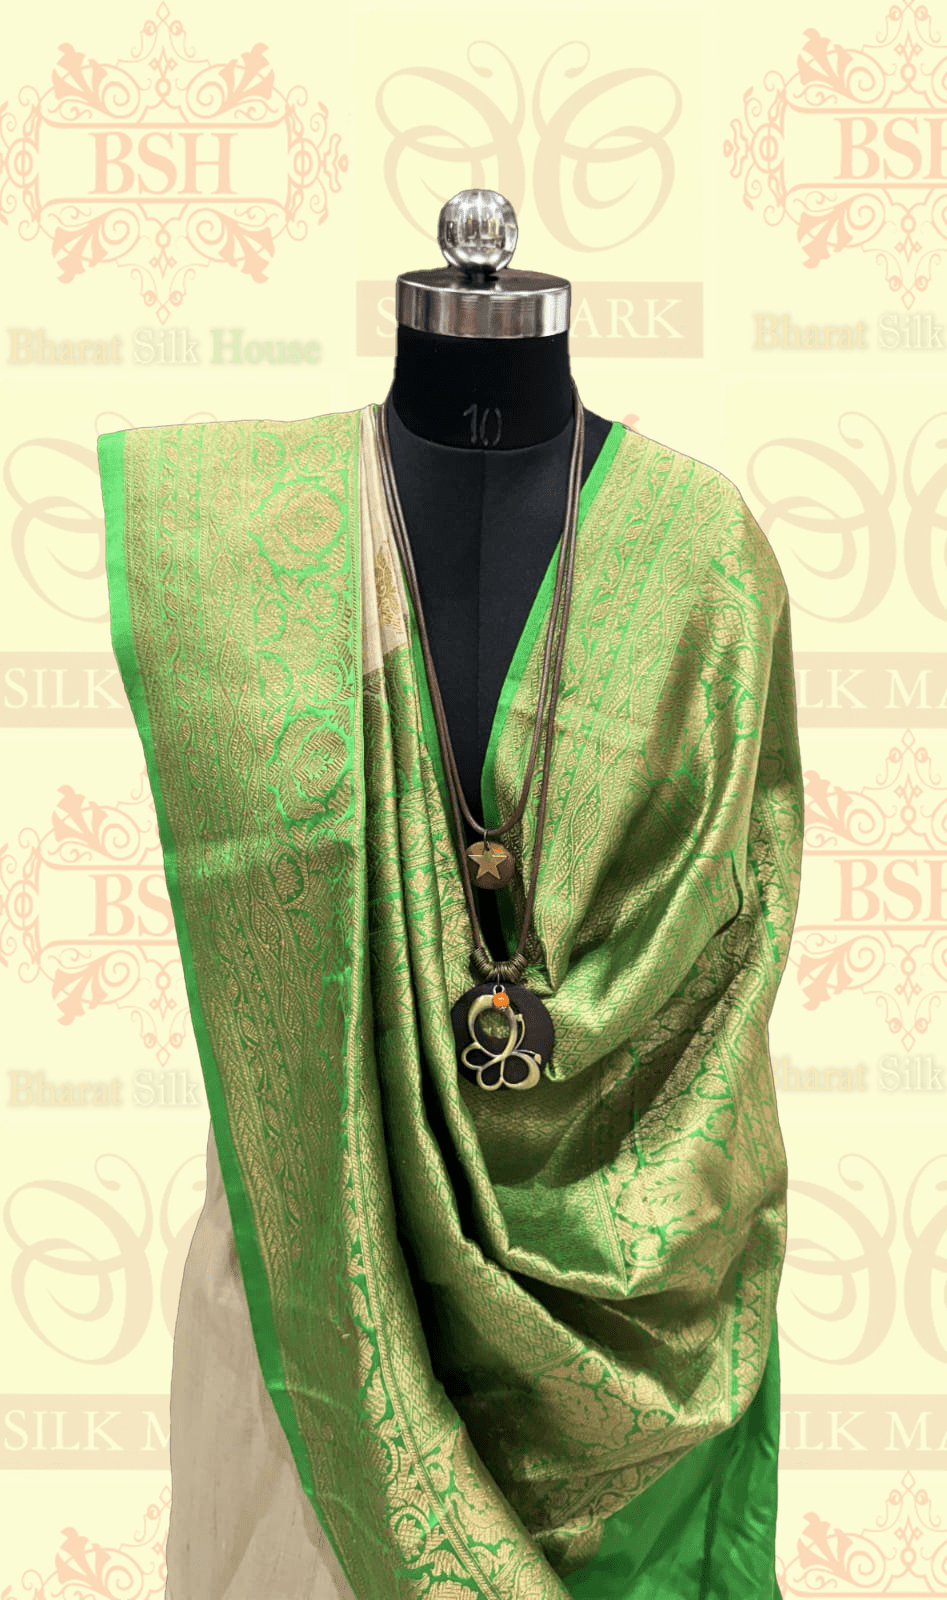 Shades Of Off White Pure Tussar Moonga Silk Handloom Saree With Zari Border Tussar Bharat Silk House